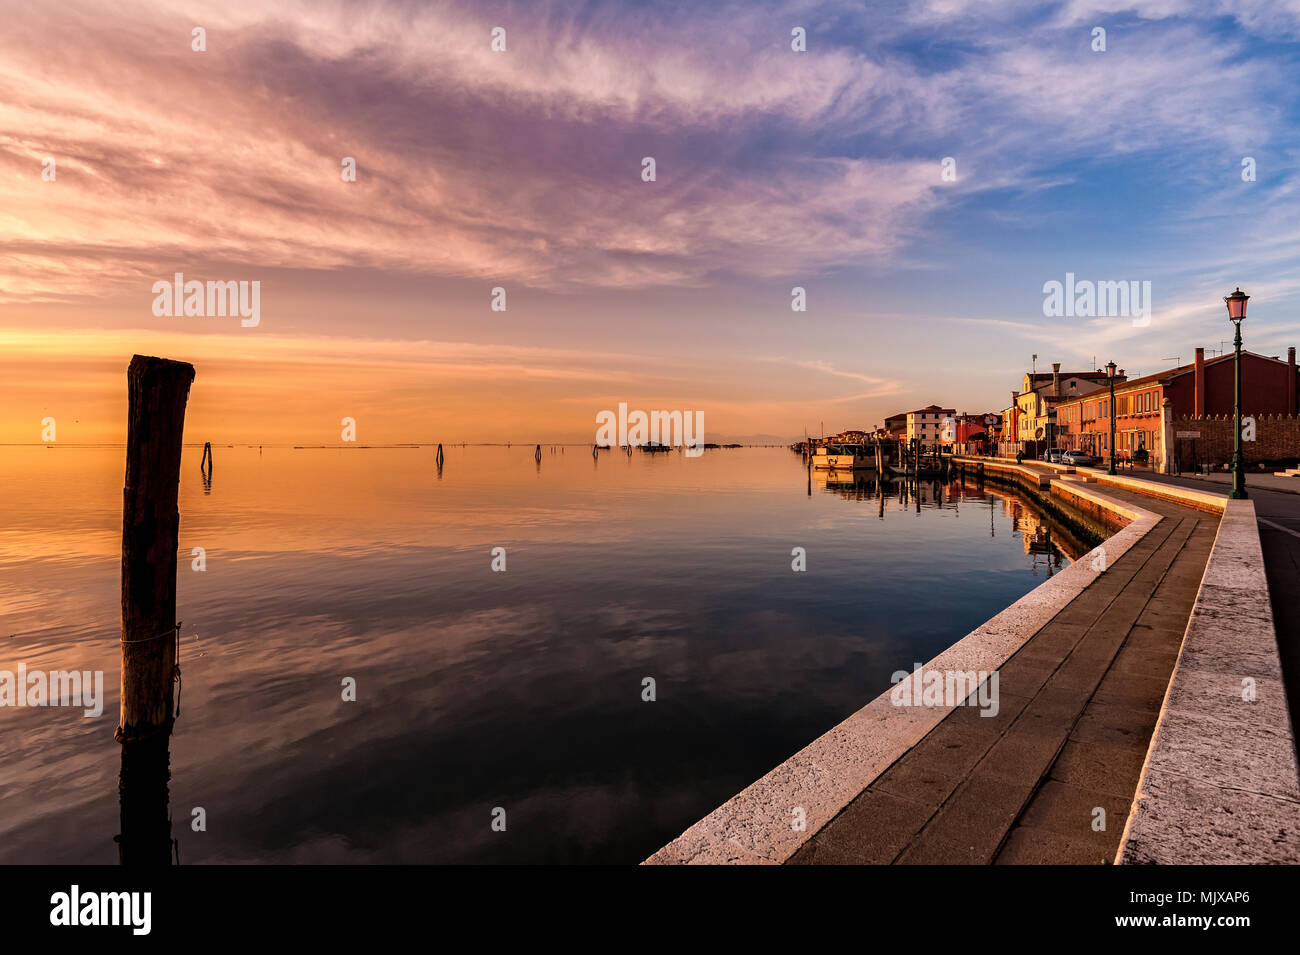 Romantic sunset on the Venice lagoon. Island of Pellestrina and town. Stock Photo